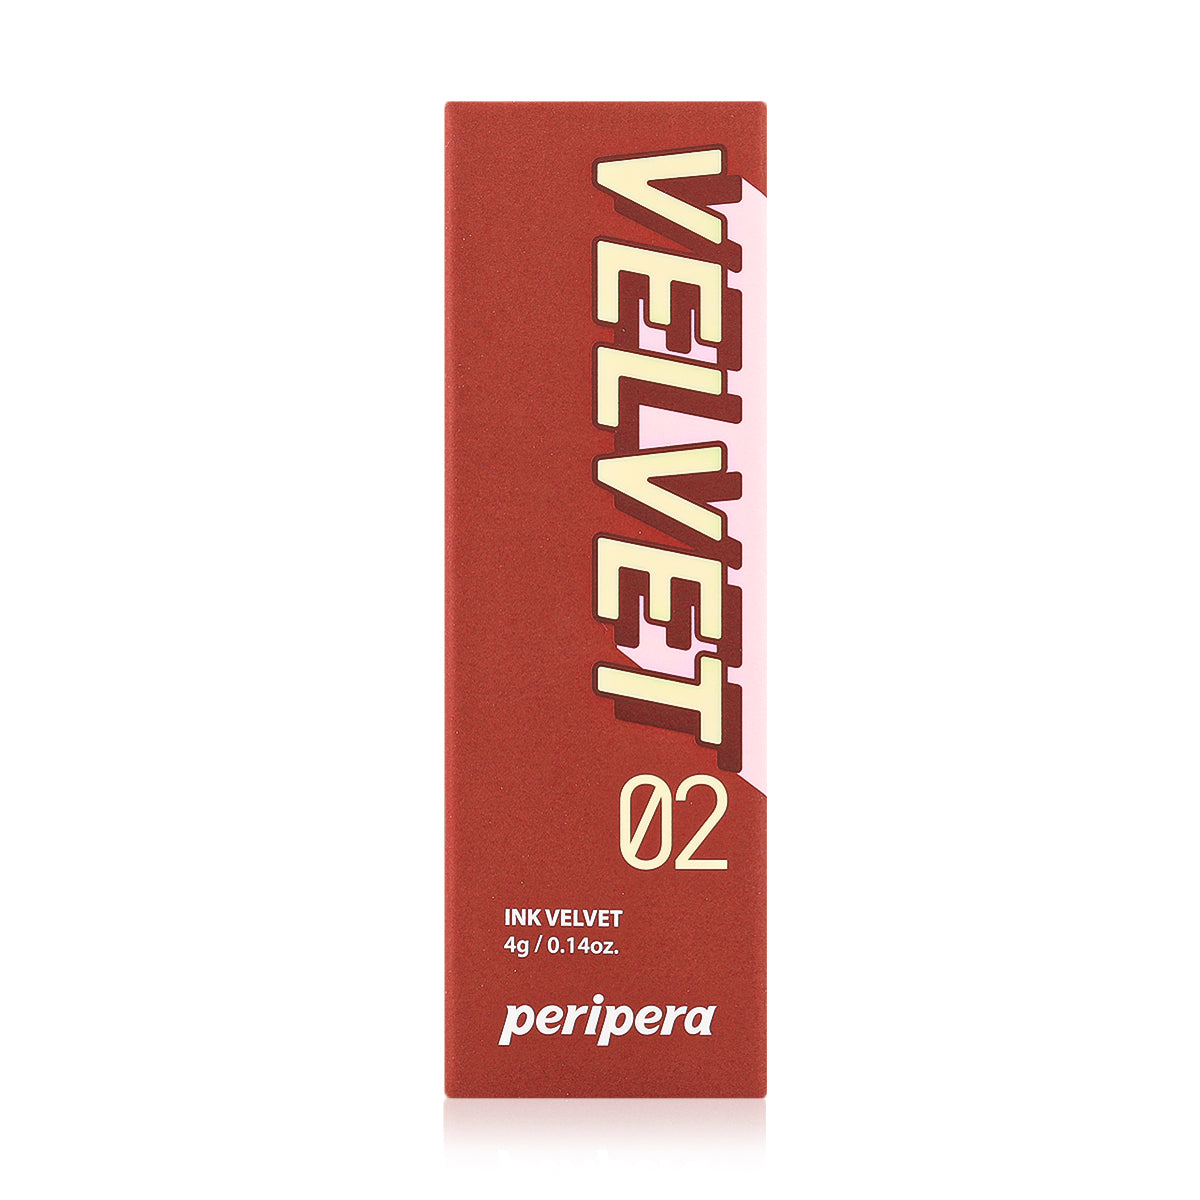 PERIPERA- Ink The Velvet AD (1.Good Brick)